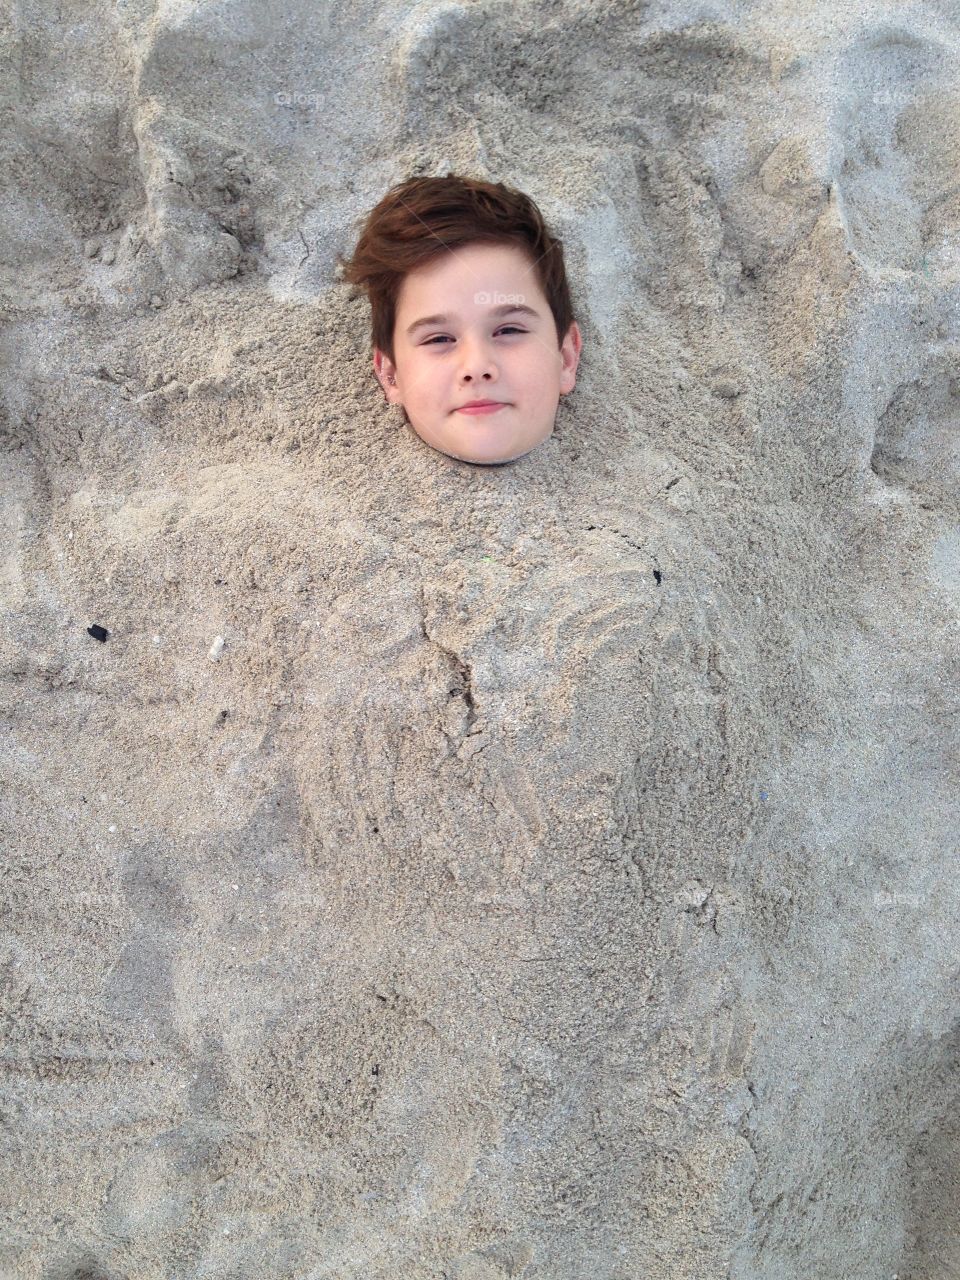 Boy buried in sand at beach